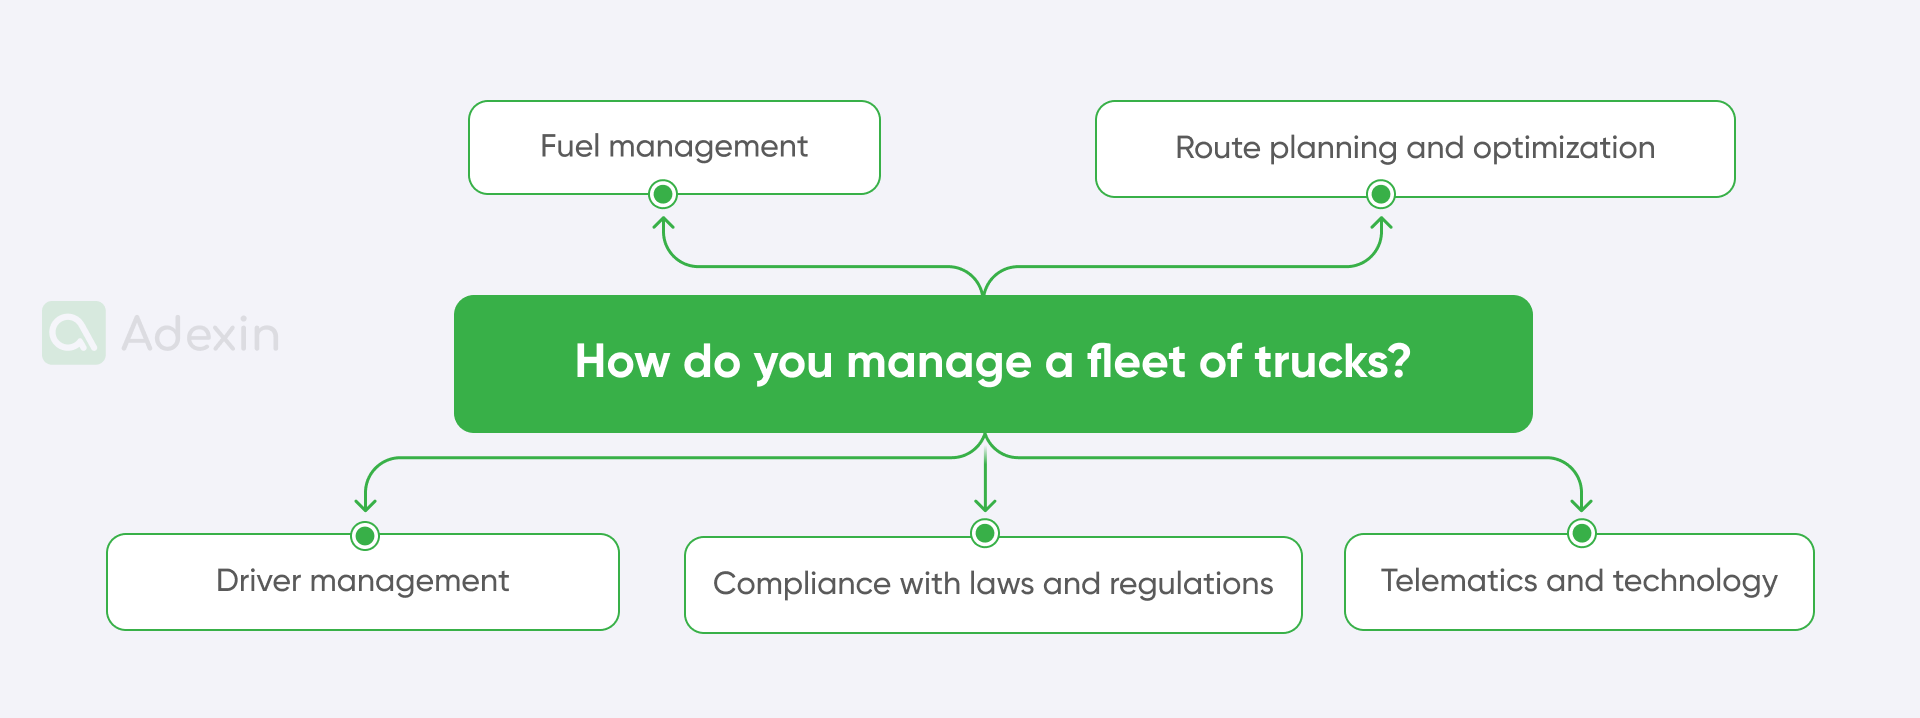 Indicators to manage a fleet of trucks